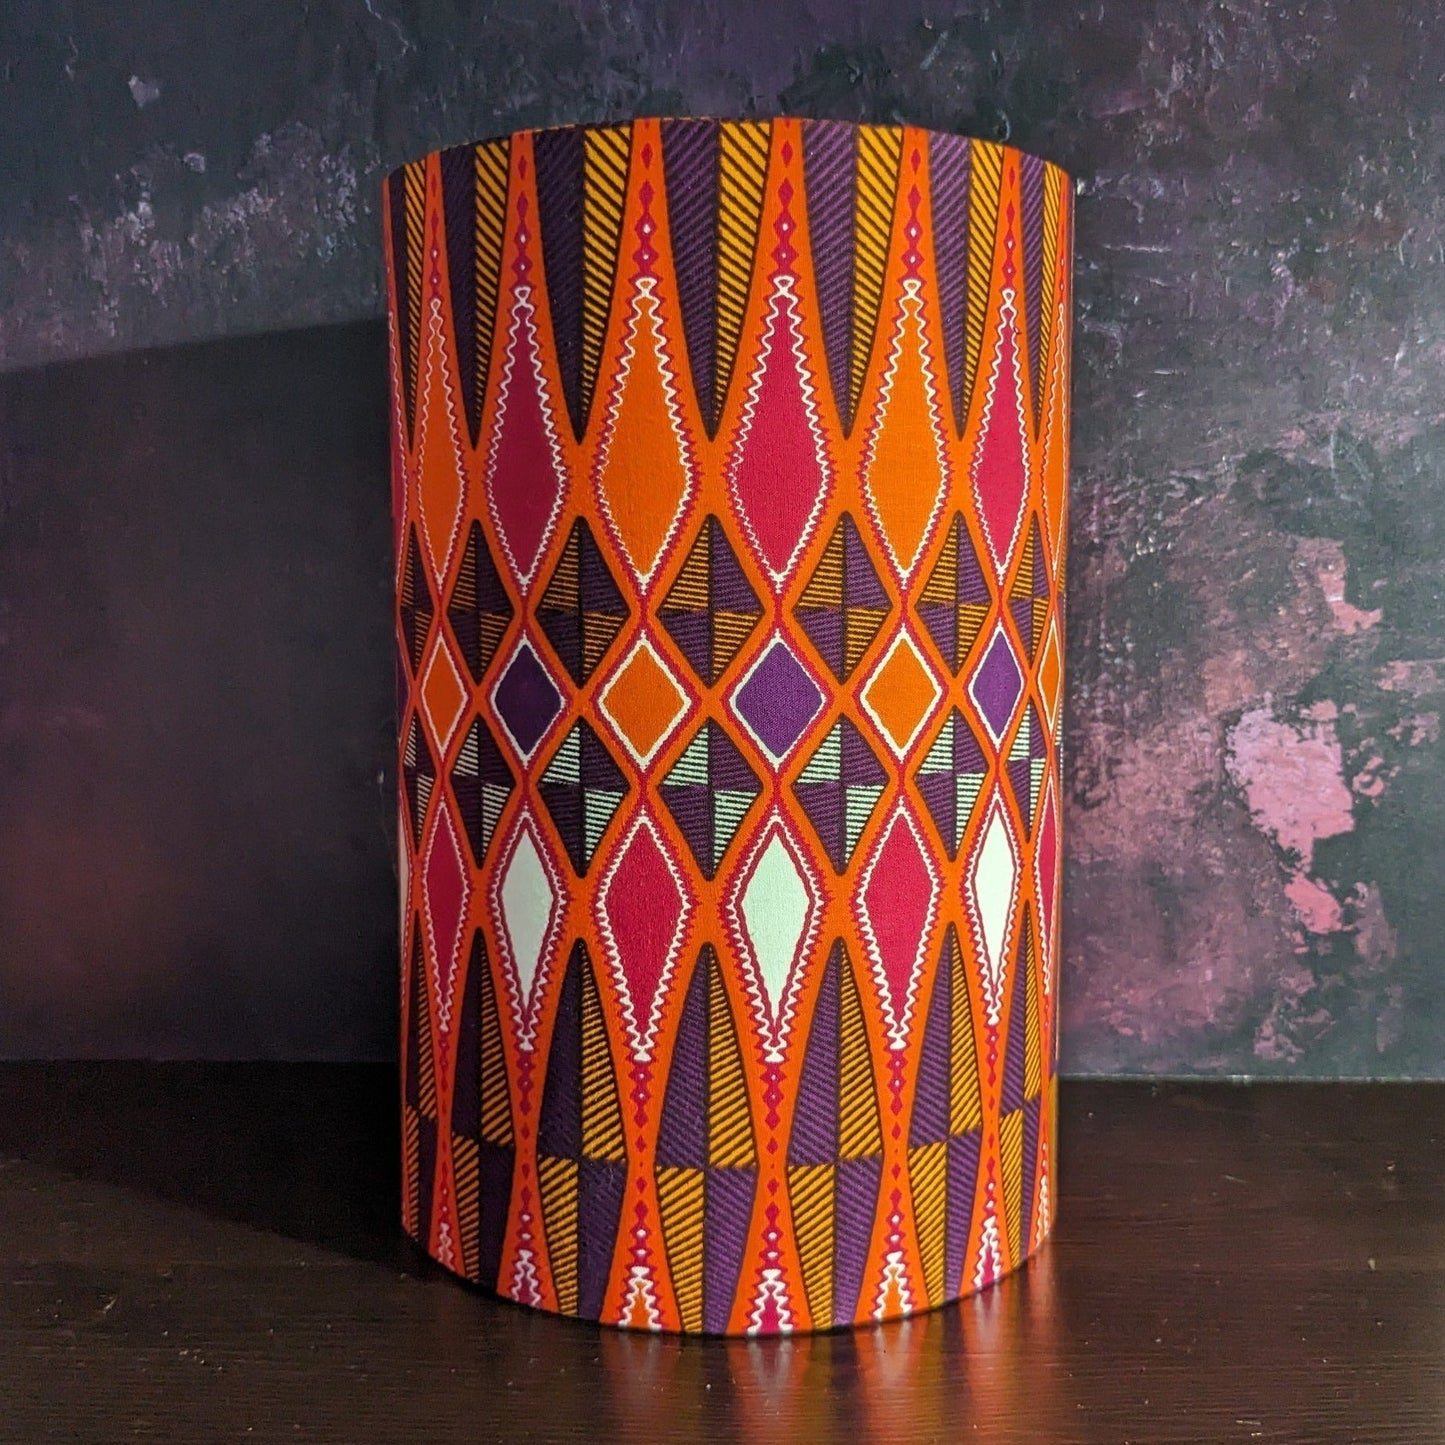 IBEJI Lampshade Set of Two in Orange Magenta Purple Aztec Tribal pattern